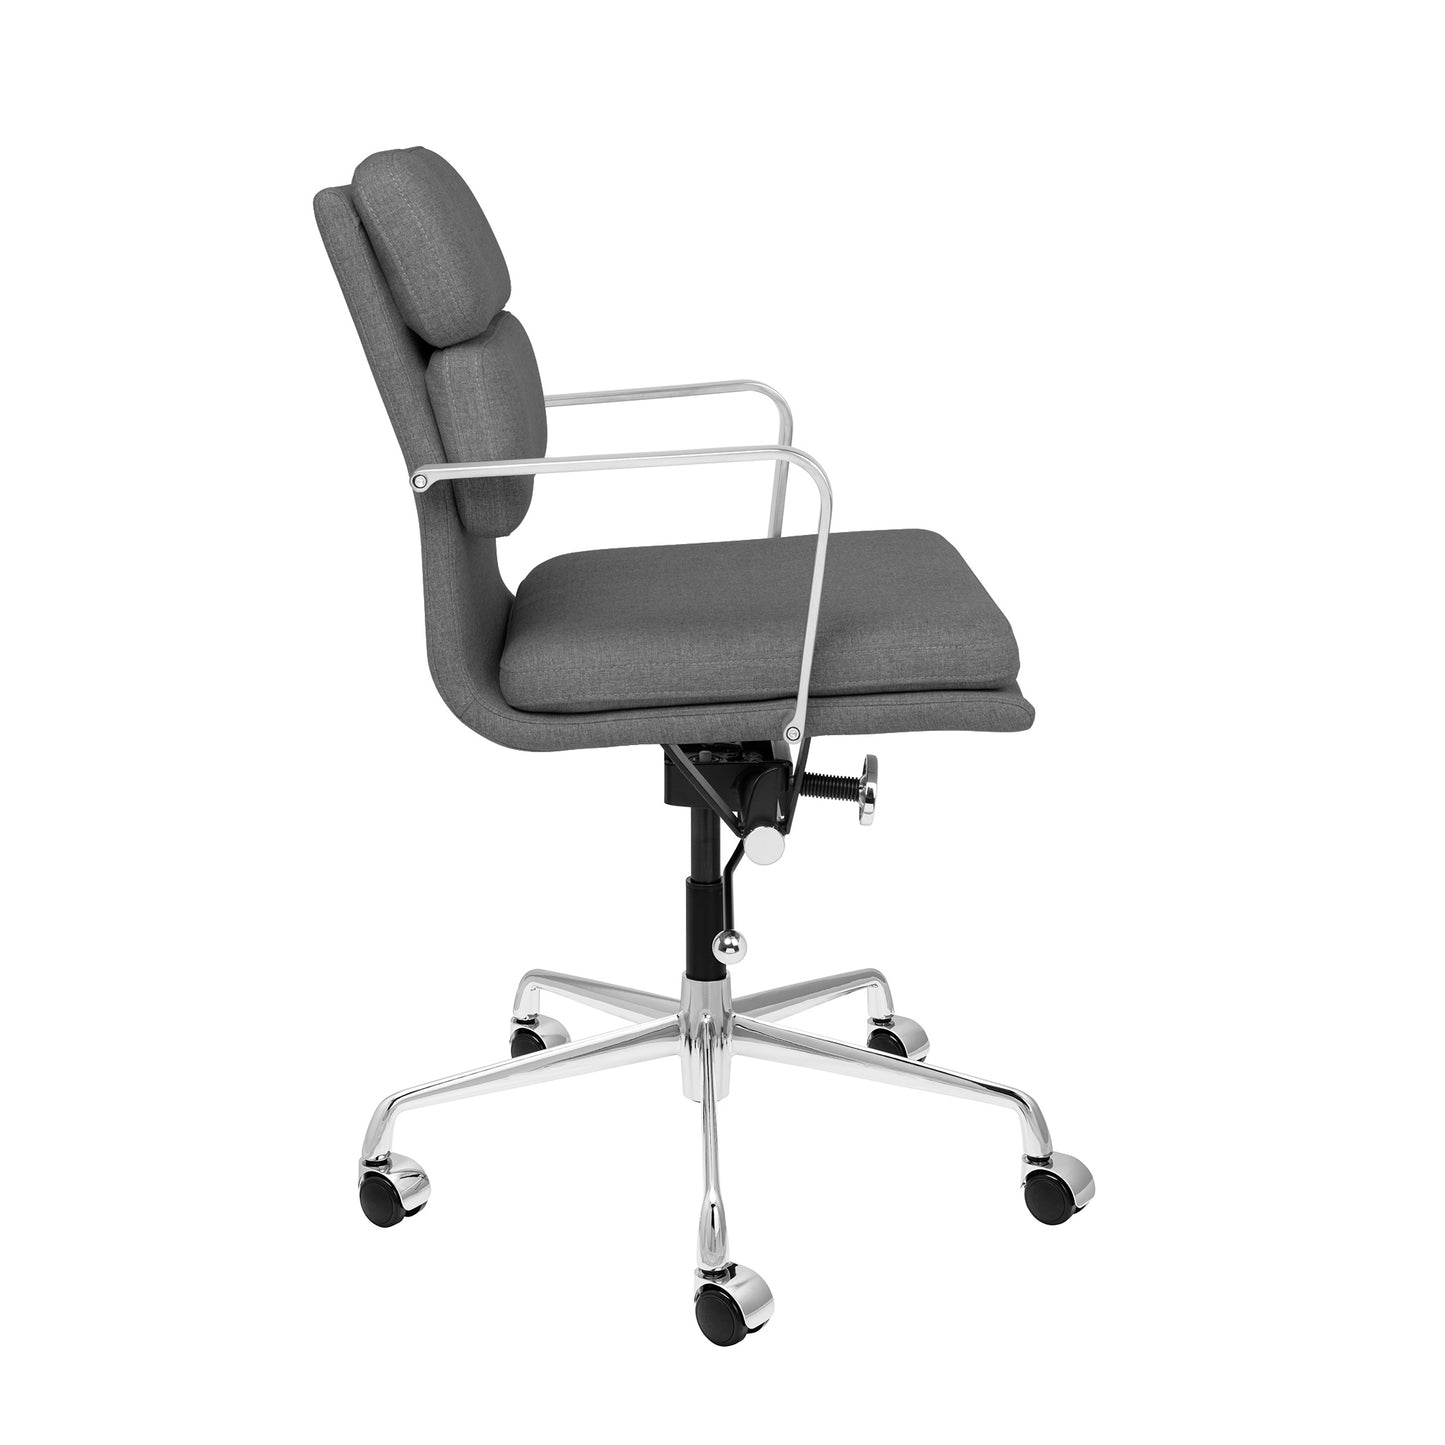 SOHO II Padded Management Chair (Charcoal Fabric)